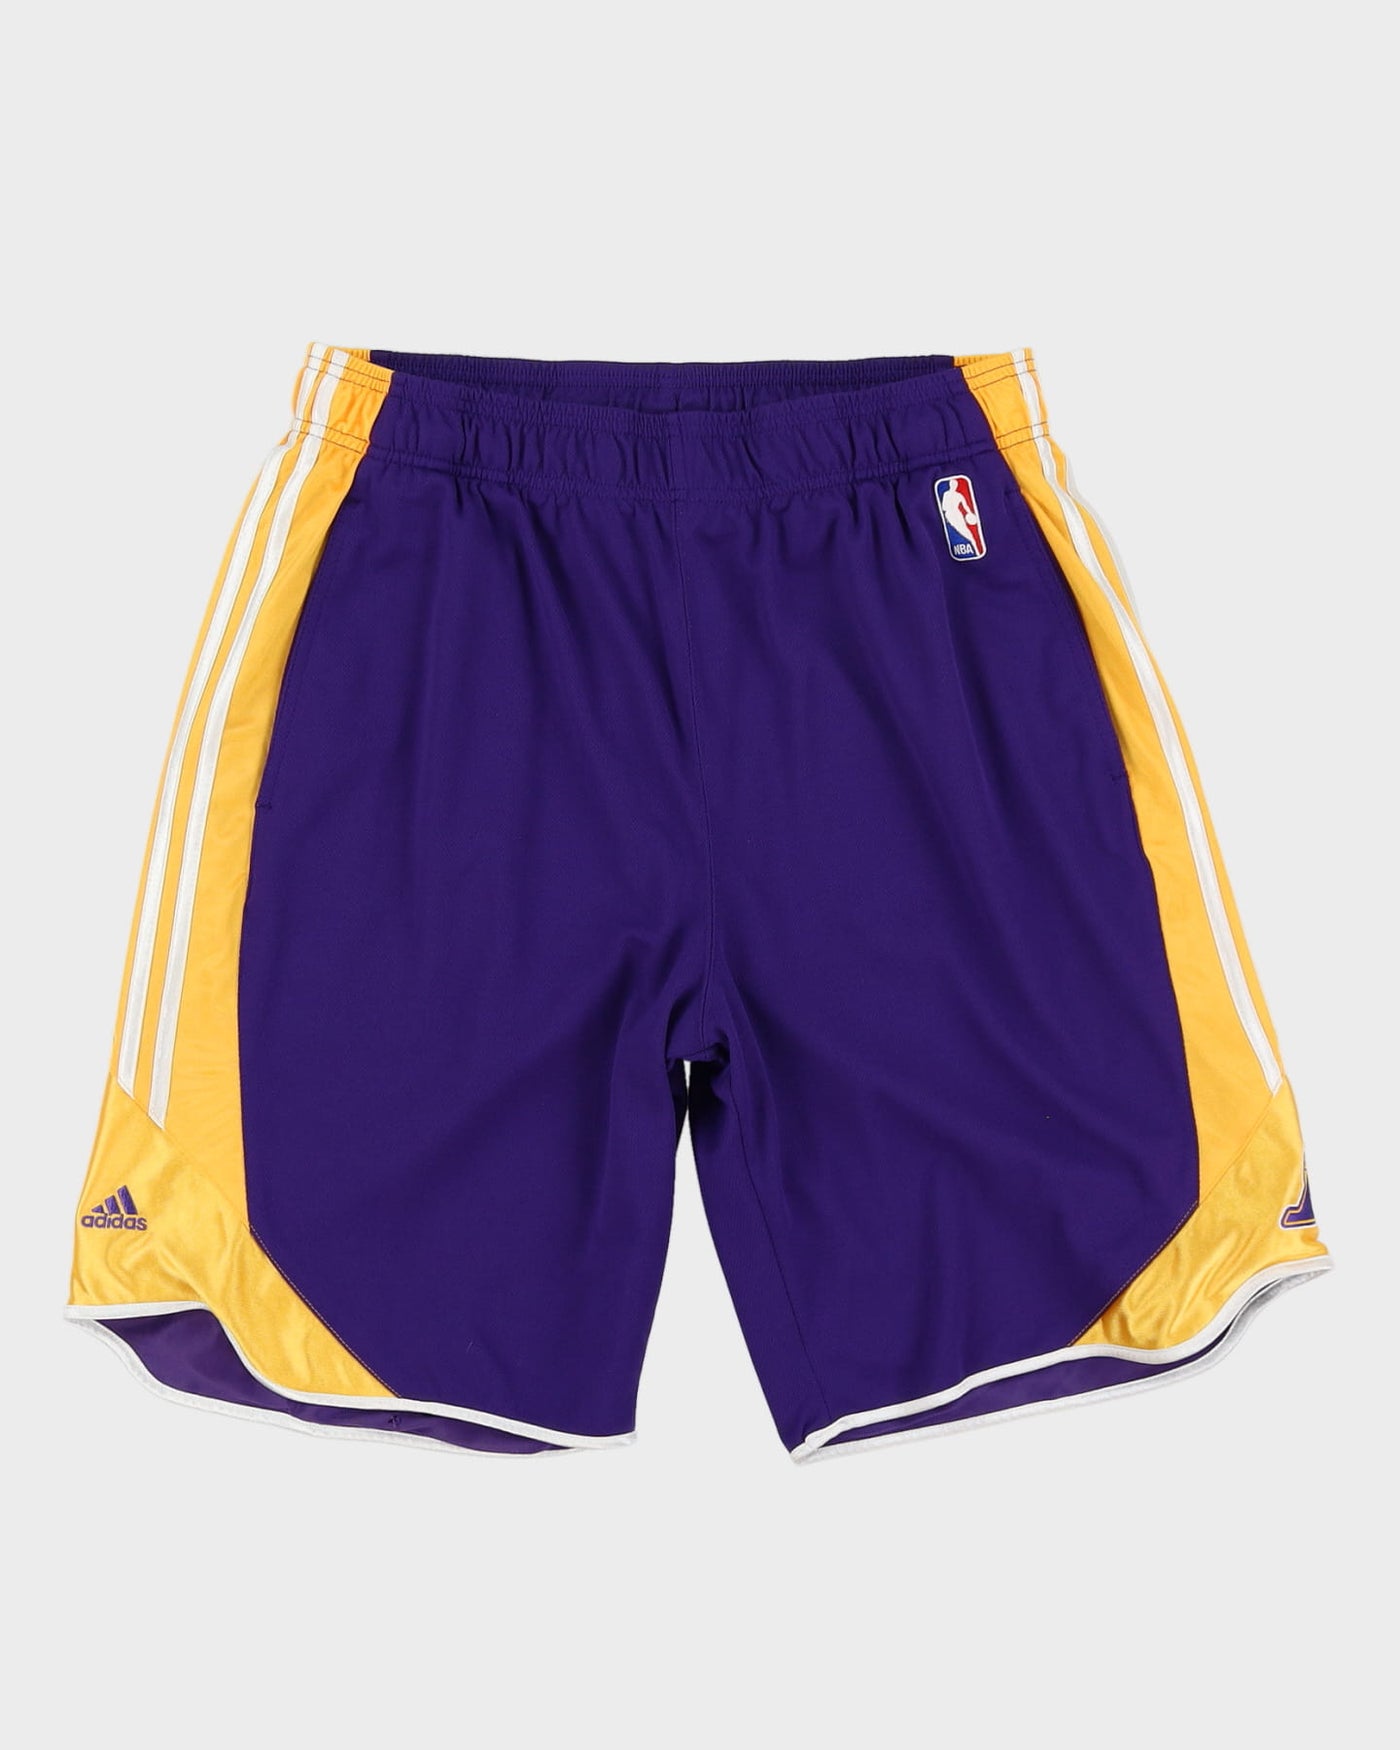 Adidas Los Angeles LA Lakers NBA Purple / Gold Basketball Jersey Shorts - L